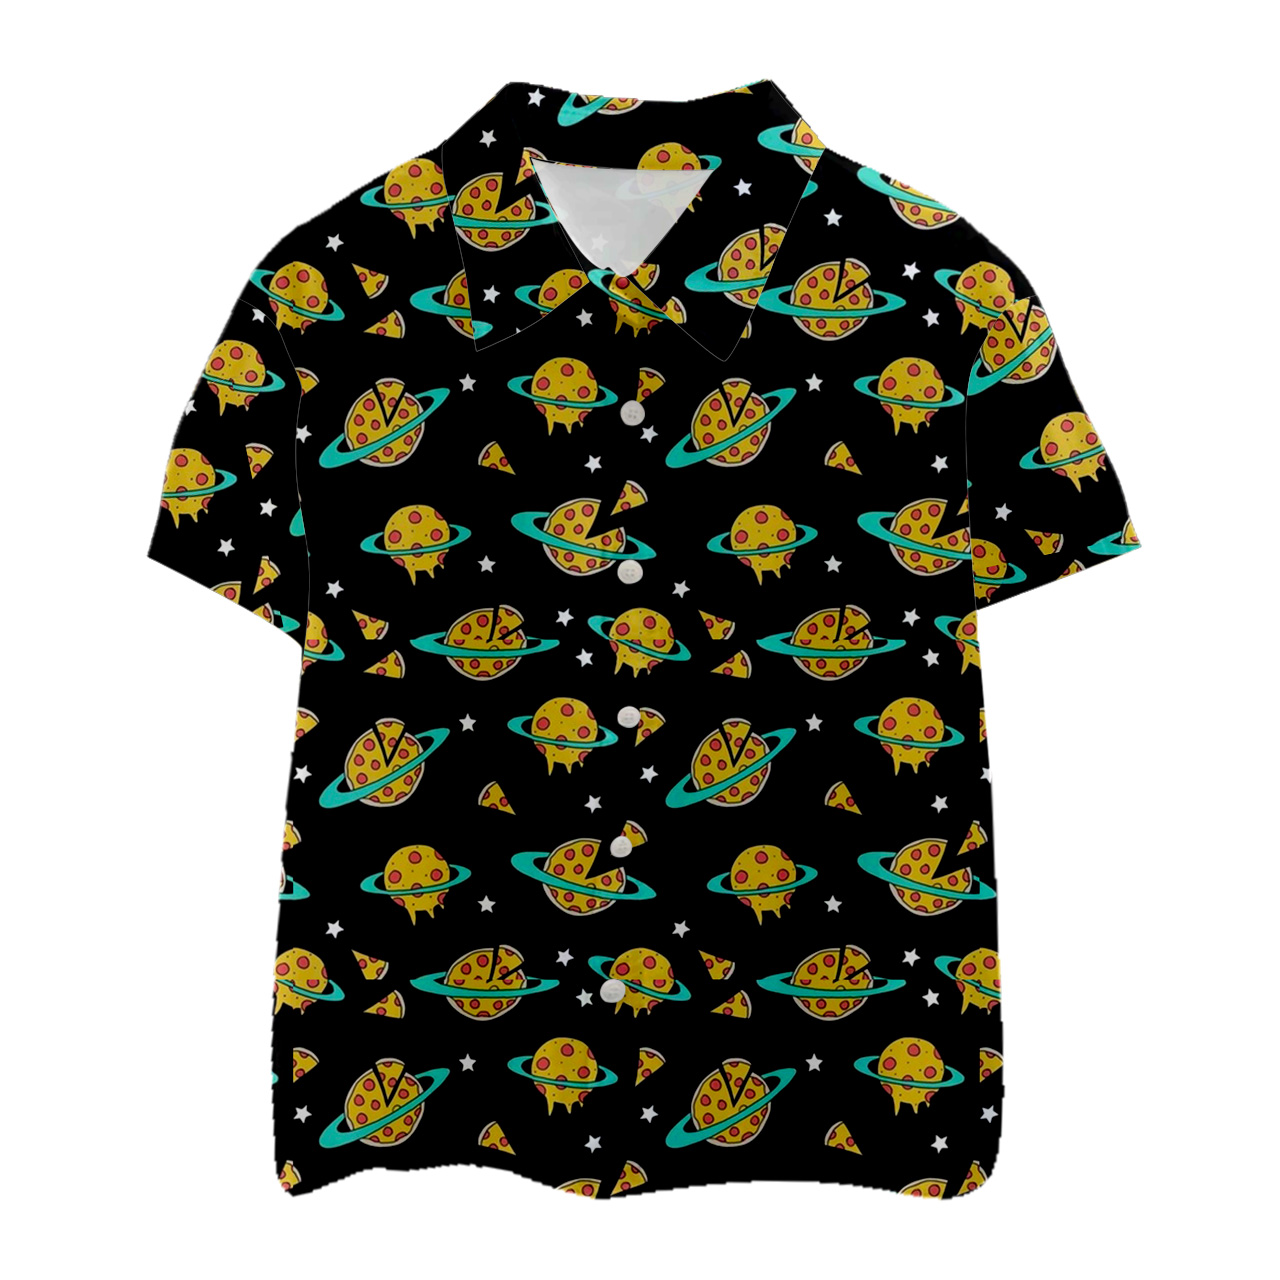 Pizza Planet Matching Button Shirt